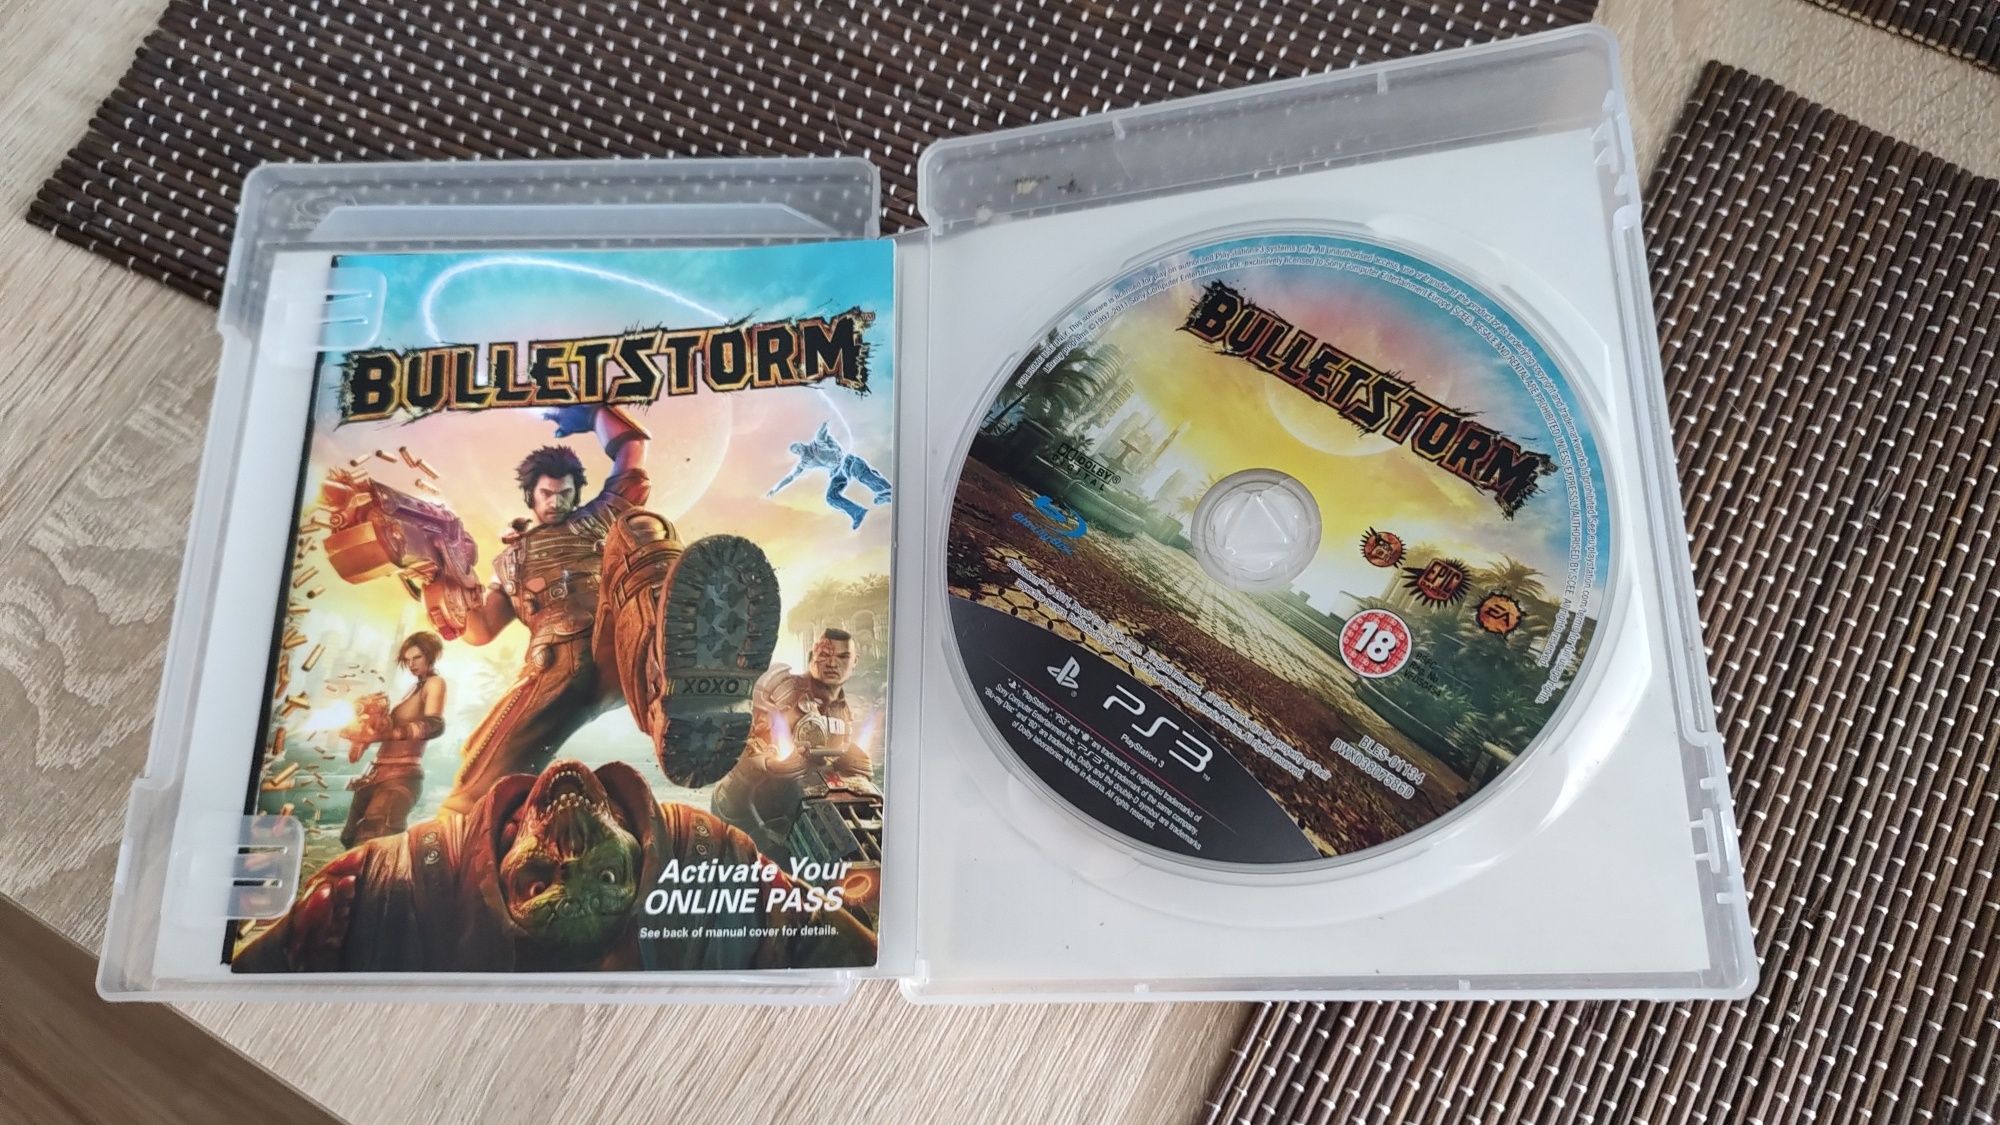 Gra na konsolę PS3 Bulletstorm